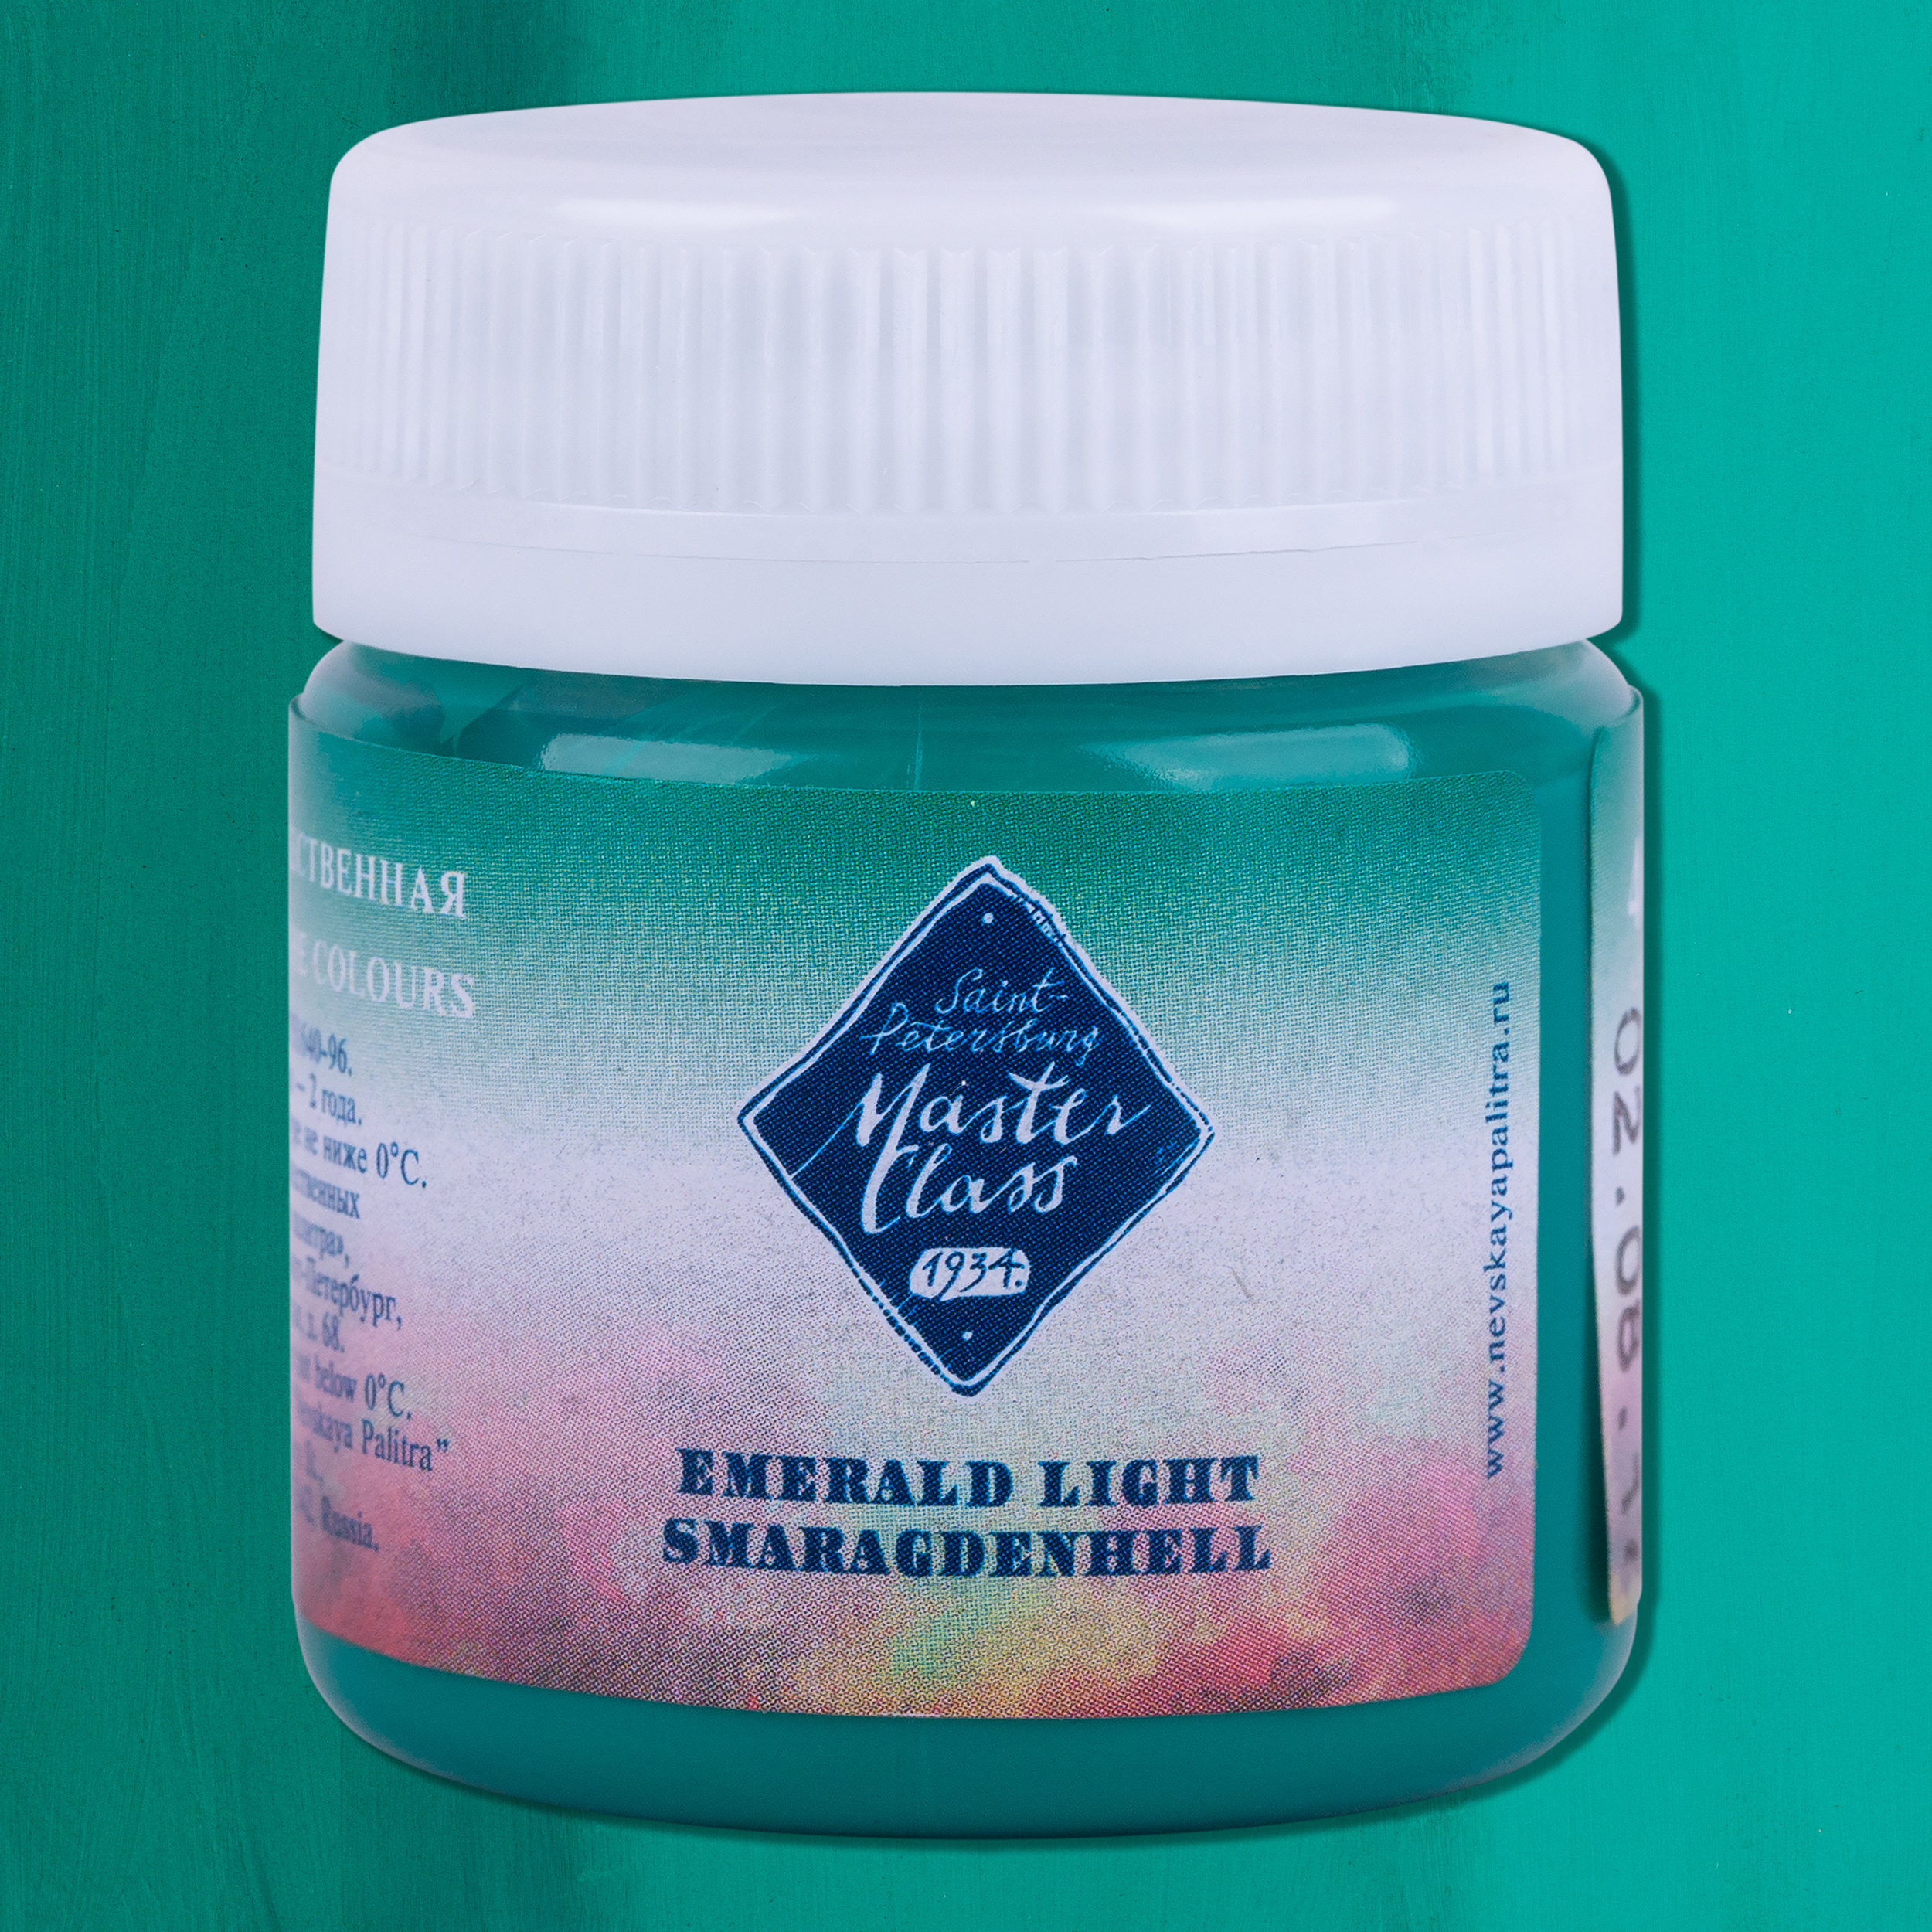 Emerald light "Master Class" in the jar. № 714